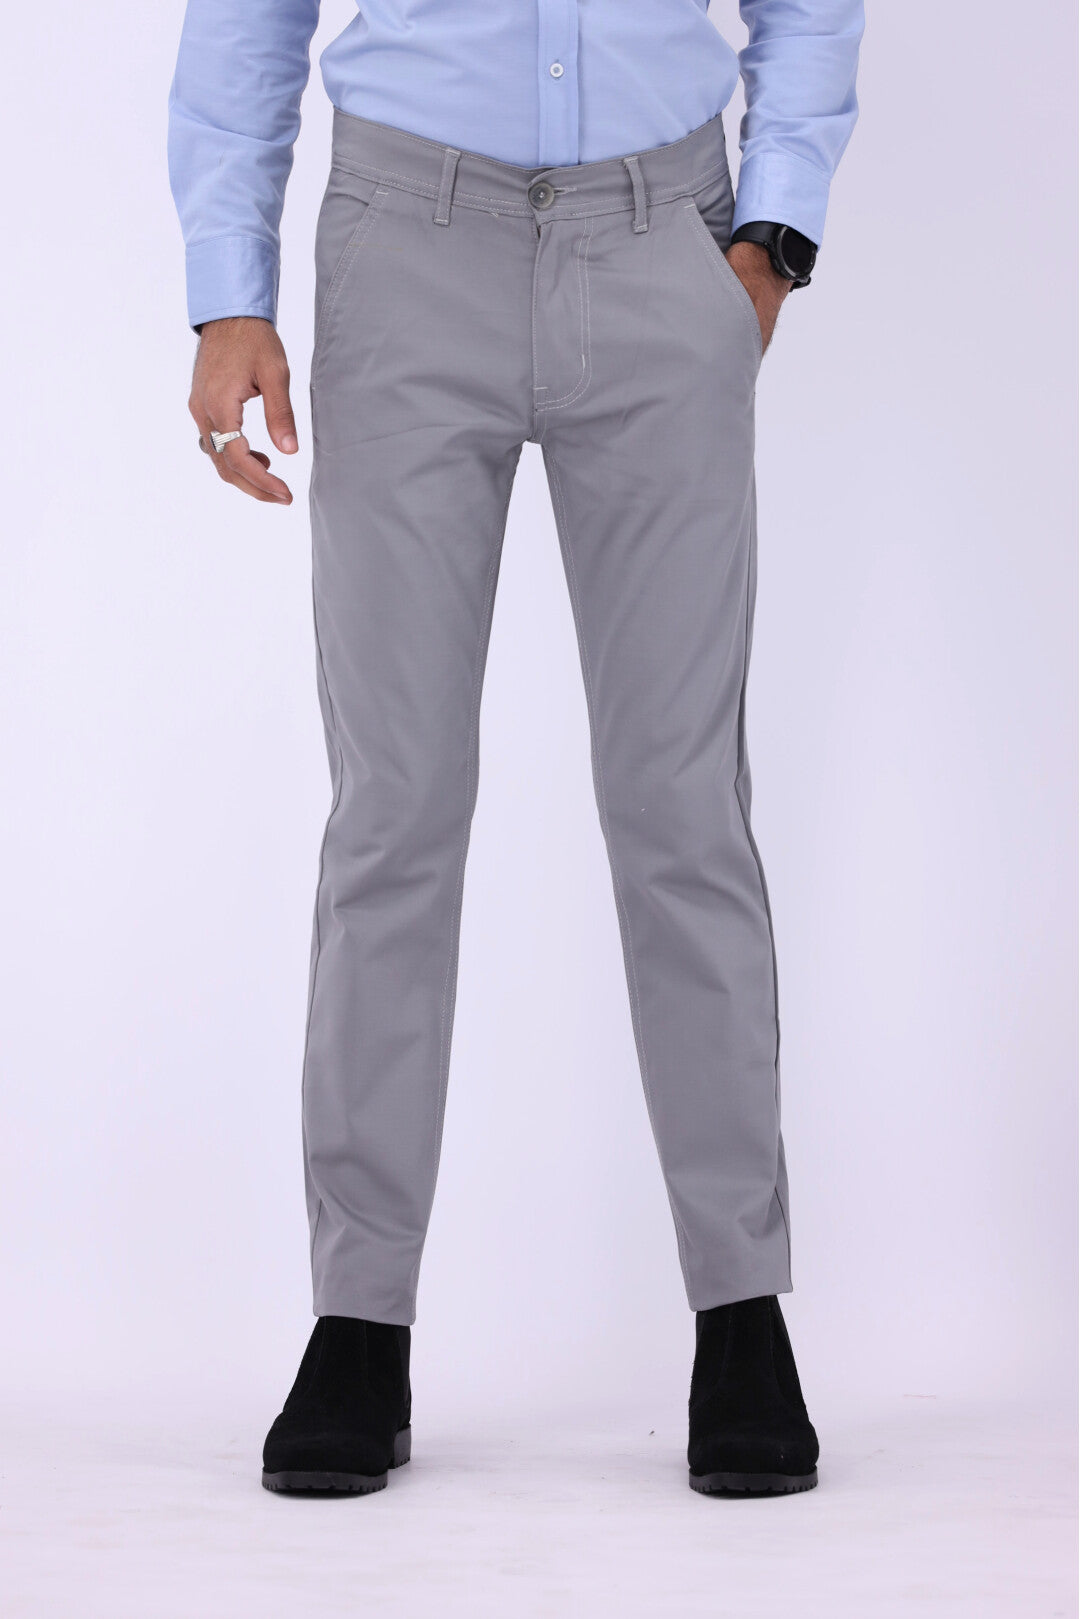 FT Cotton Chinos Pant - Grey